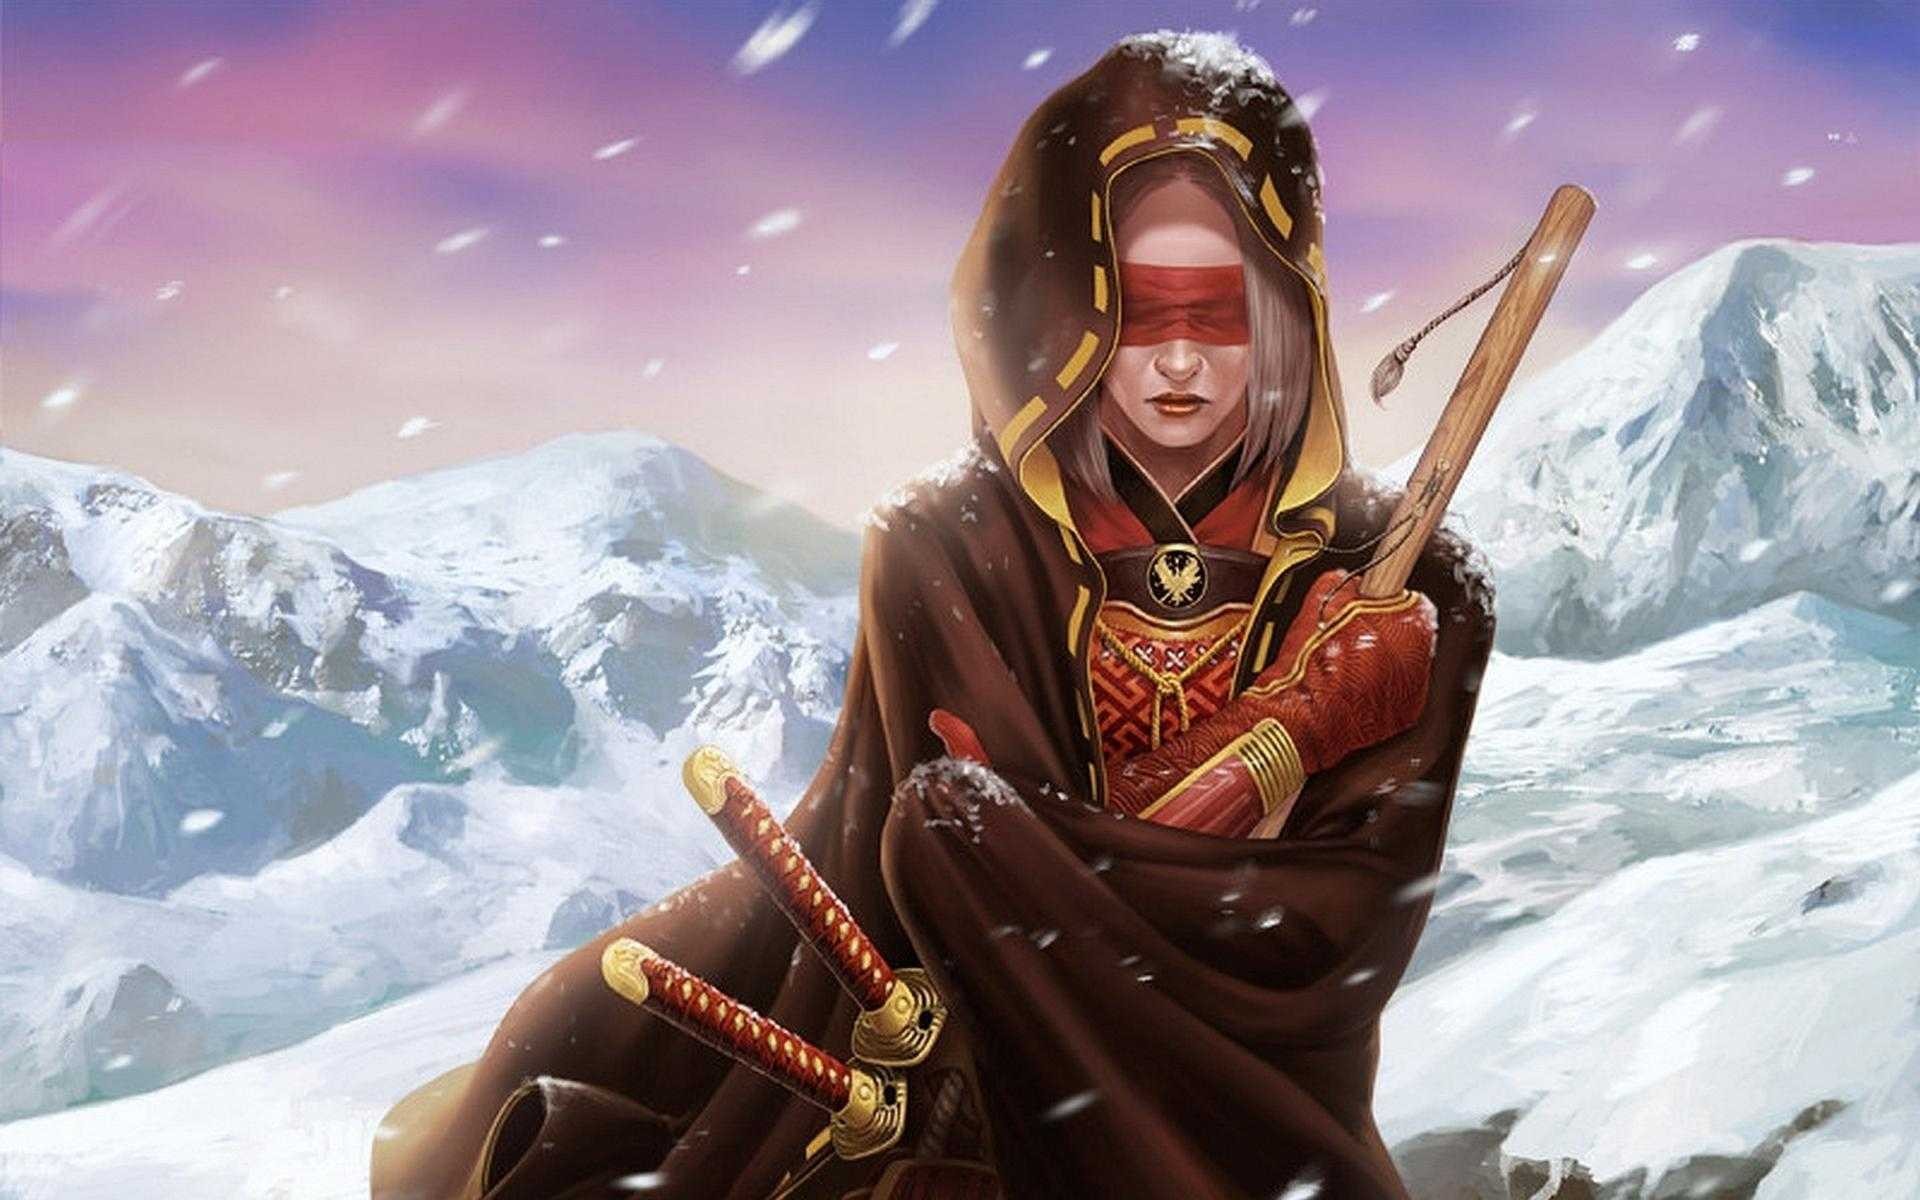 General 1920x1200 katana warrior snow fantasy art fantasy girl mountains blindfold sword weapon women cold outdoors winter digital art